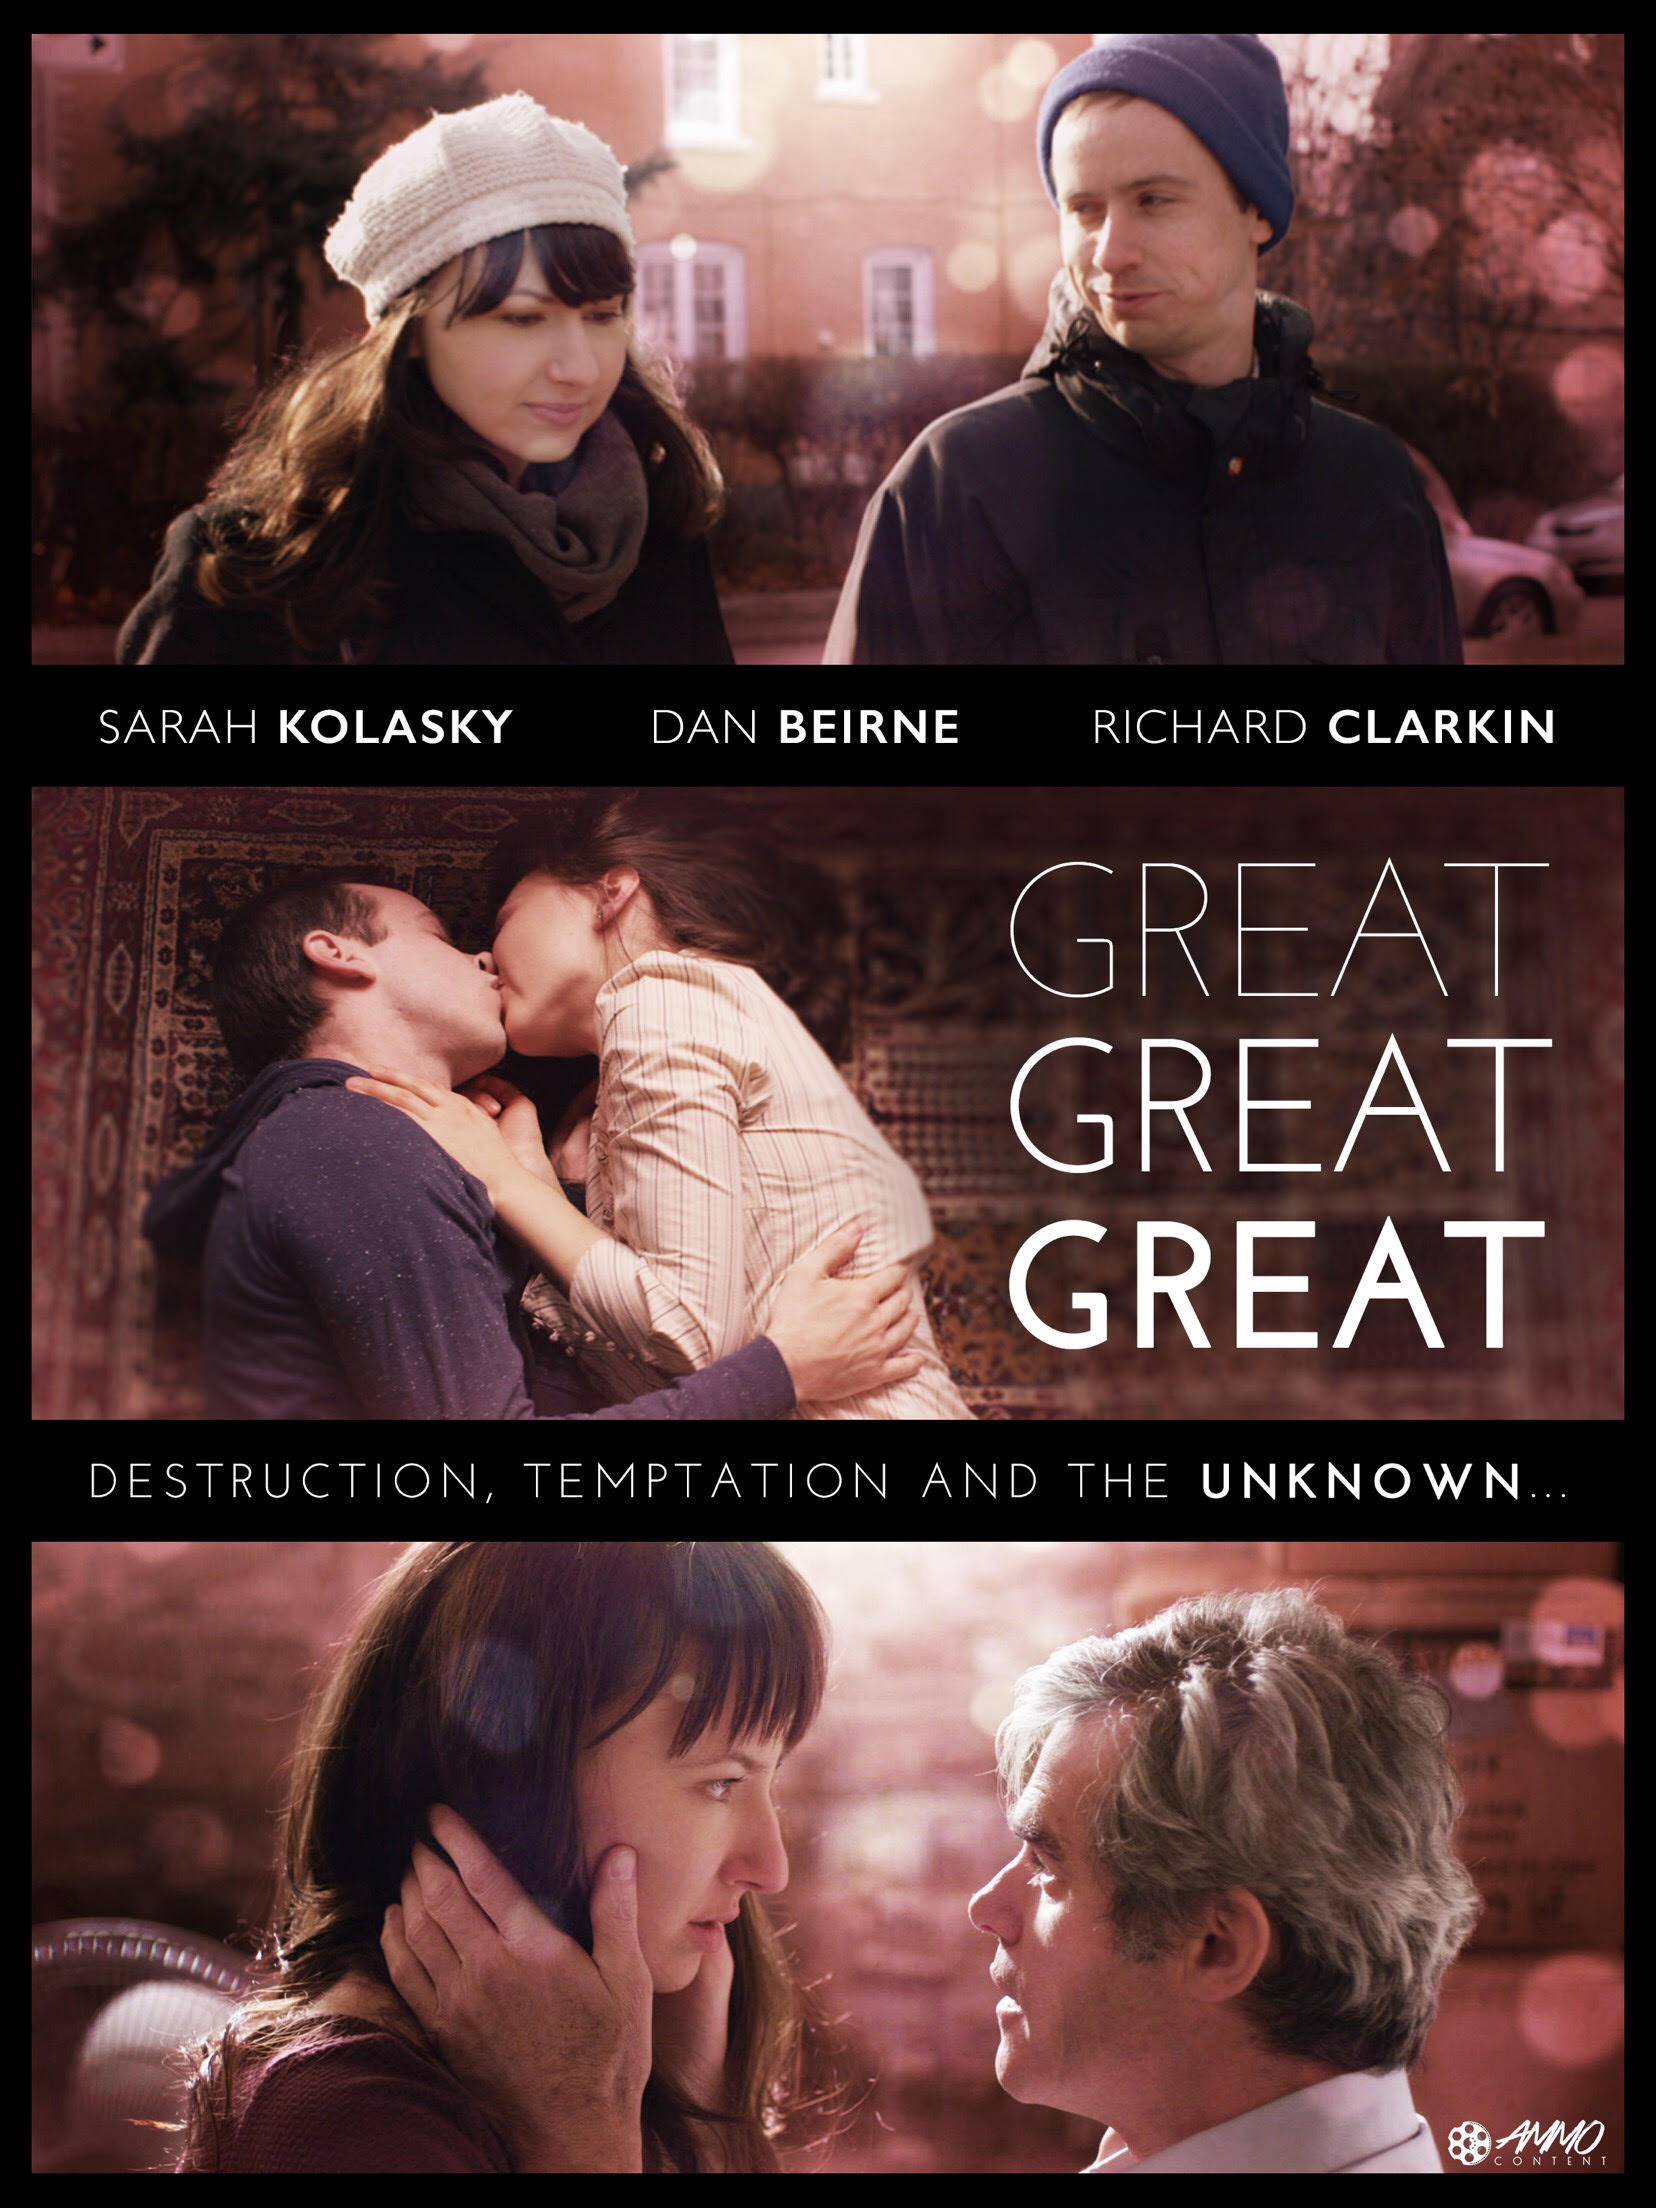 Nonton film Great Great Great layarkaca21 indoxx1 ganool online streaming terbaru